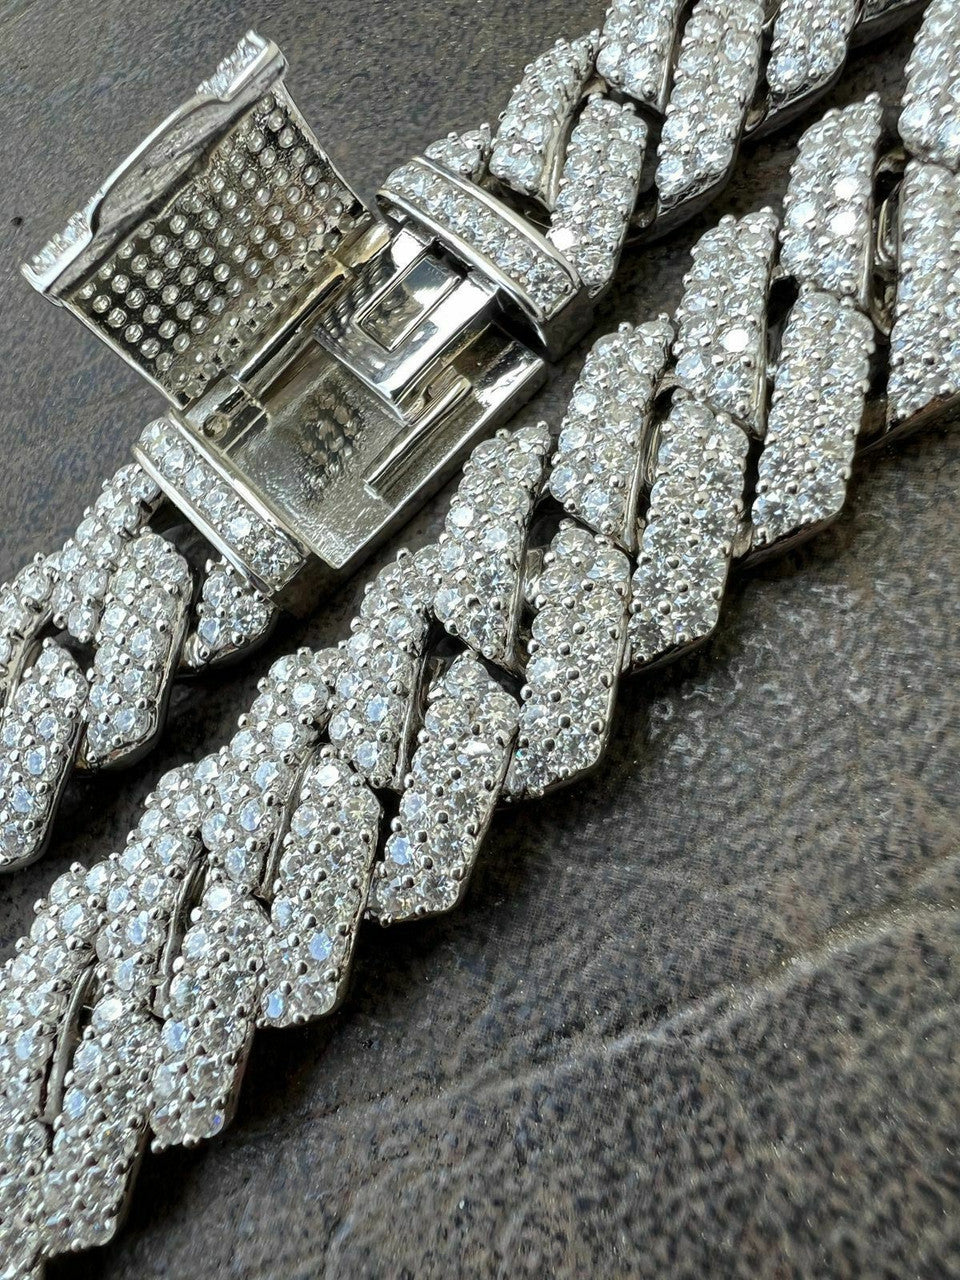 14mm White Gold Iced out Prong Miami Cuban Link Bracelet Diamond Moissanite 925 Sterling Silver Bracelet